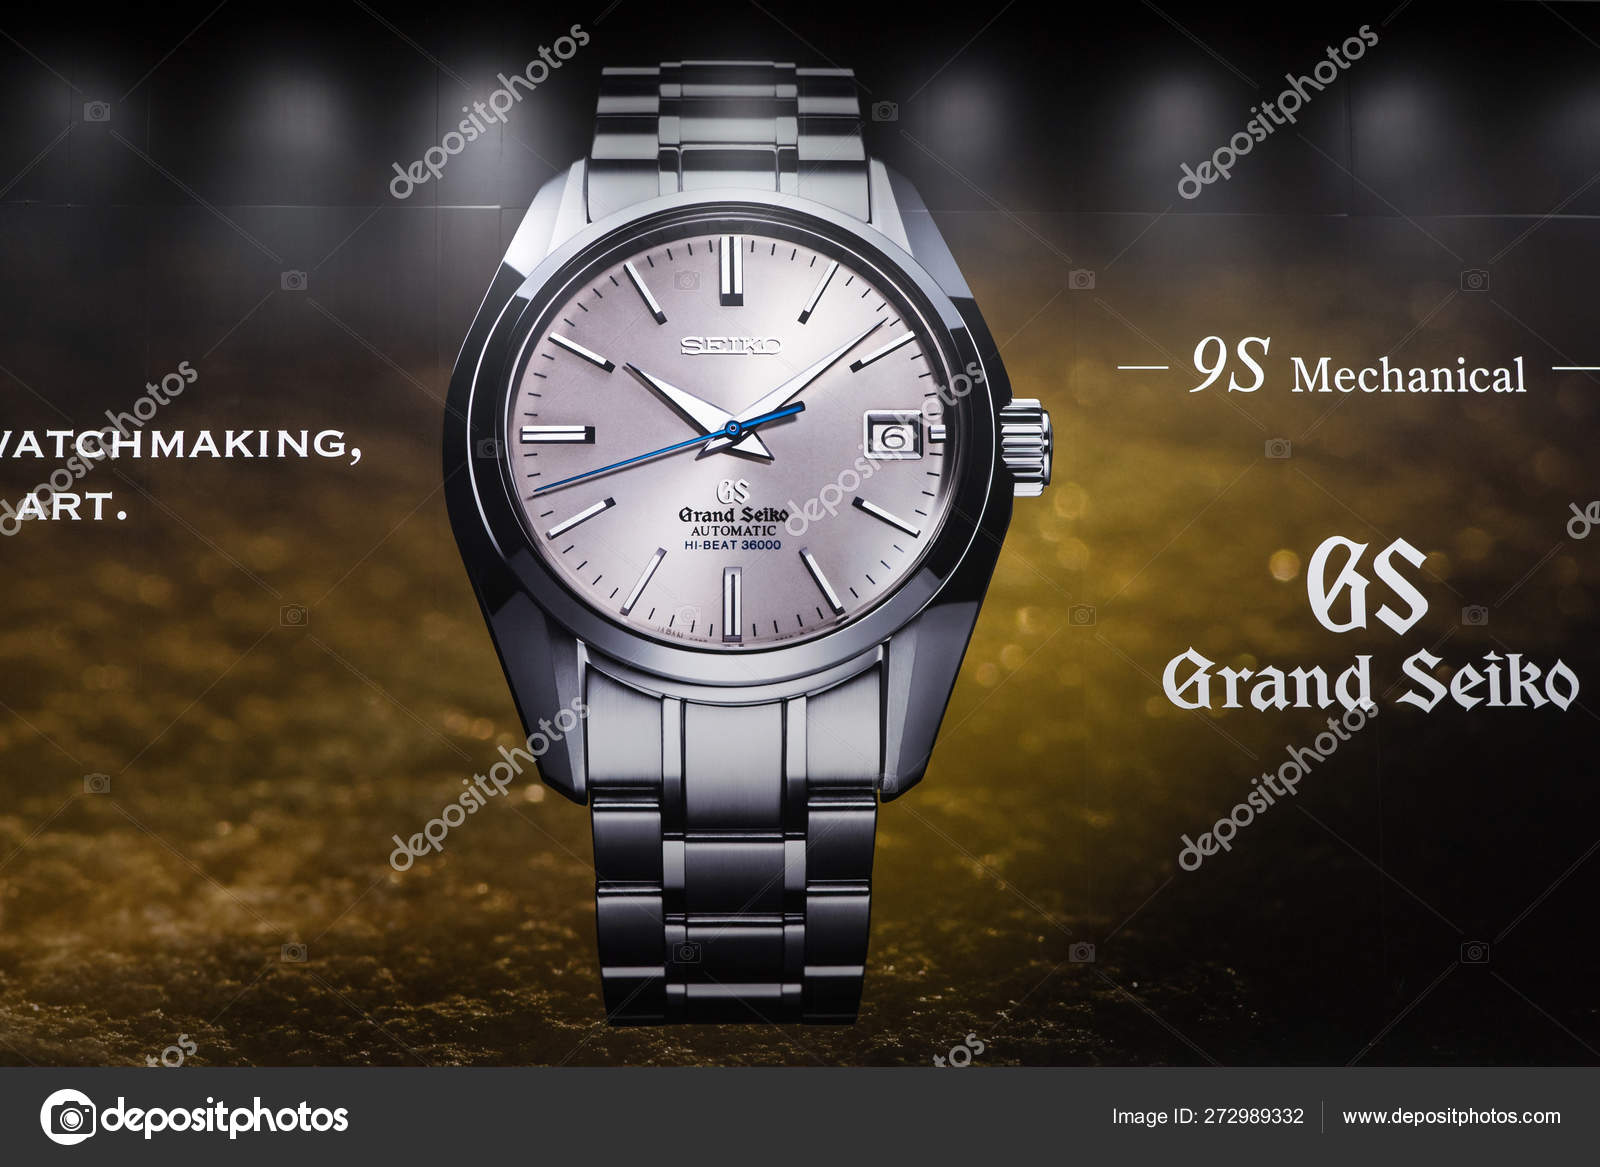 Grand Seiko Watch Advertisement Poster Front View – Stock Editorial Photo ©  pio3 #272989332